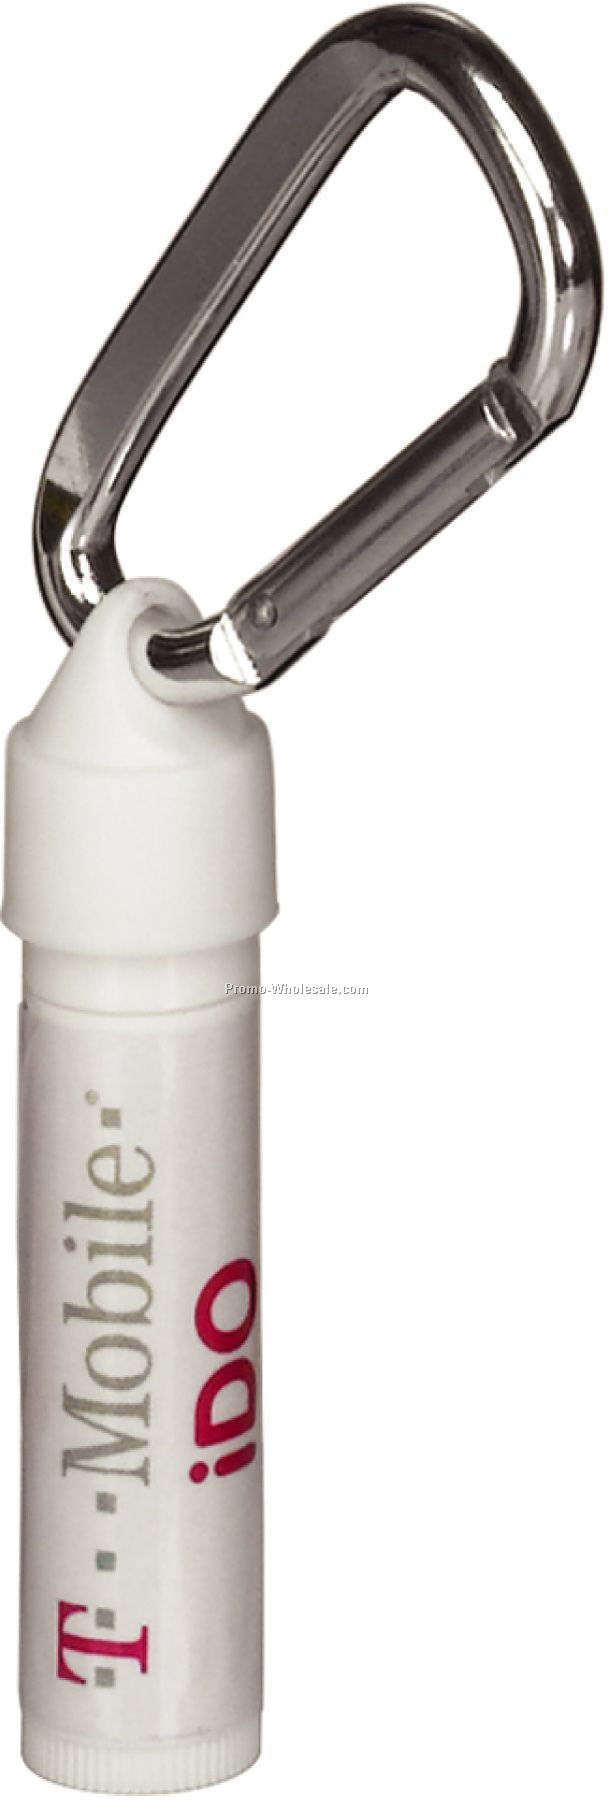 Spf 15 Lip Balm White Tube With Carabiner Clip